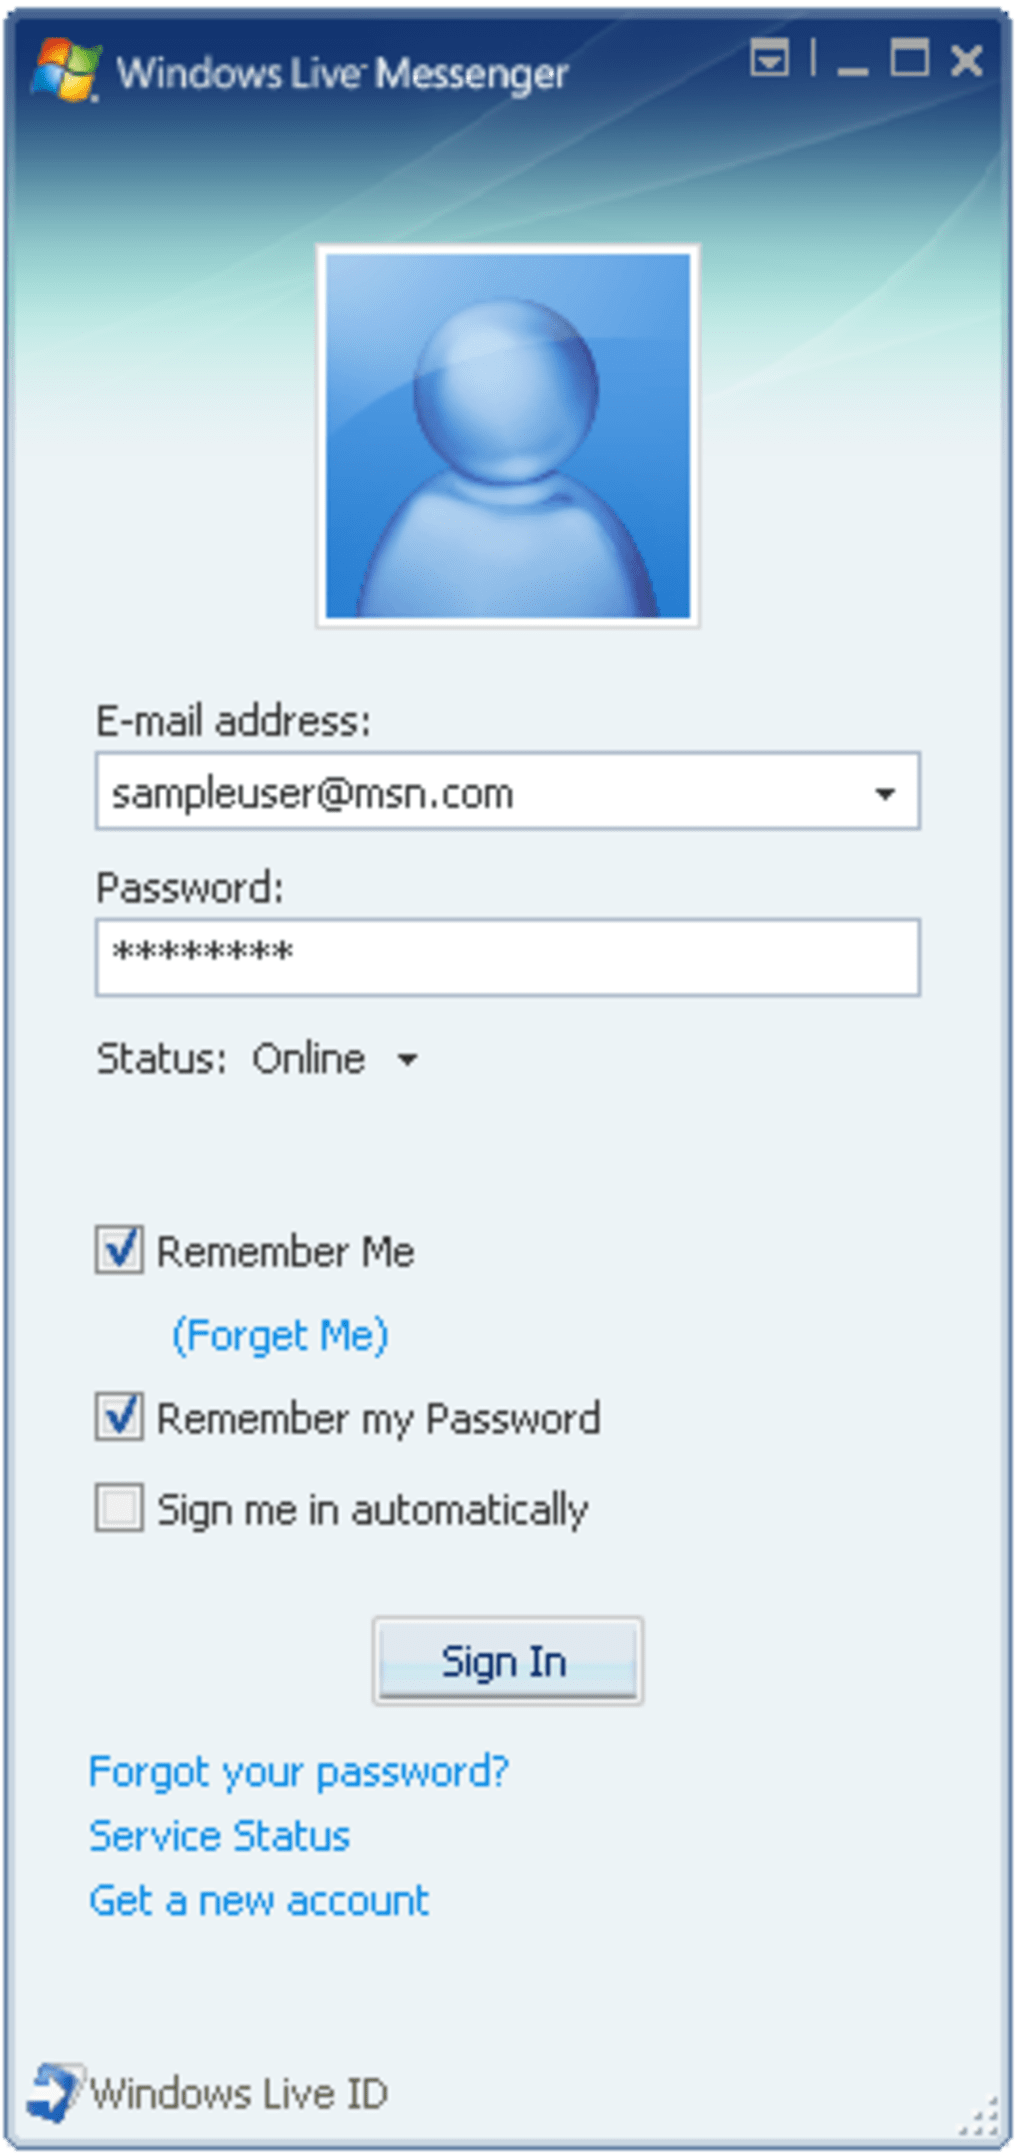 Msn Messenger Free Download For Mac